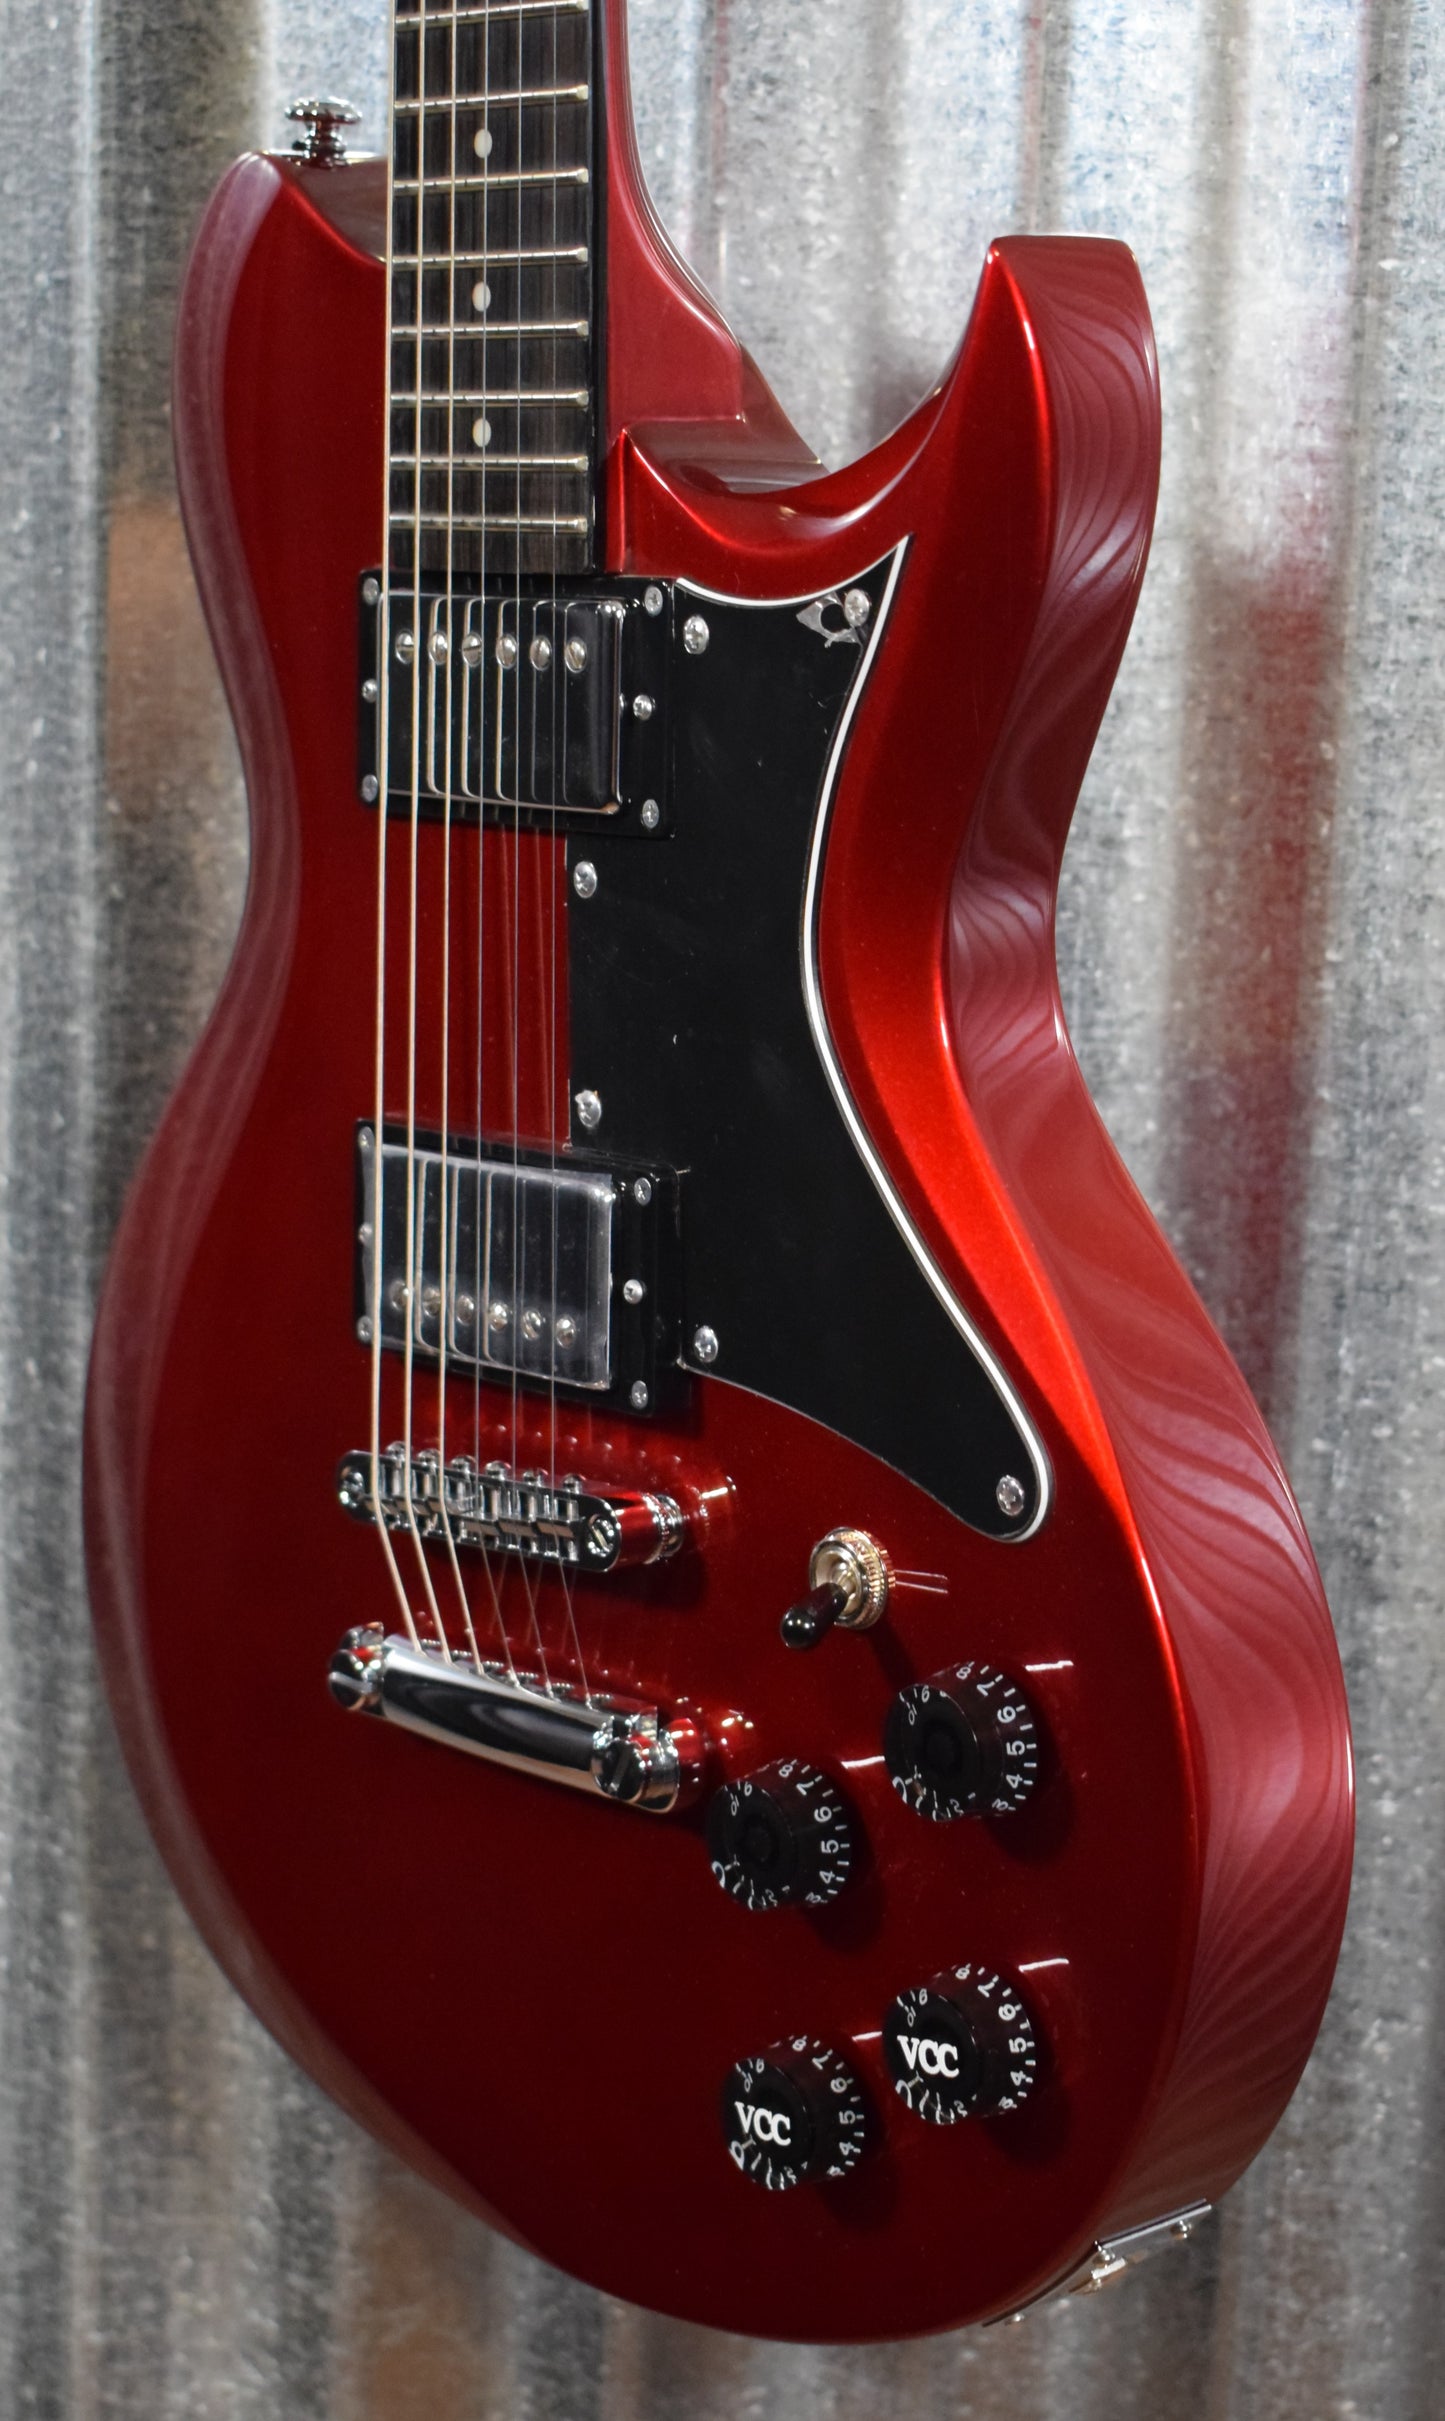 Washburn Idol Standard 26 Metallic Red Copper Duncan Guitar & Bag WIS26MRK #0211